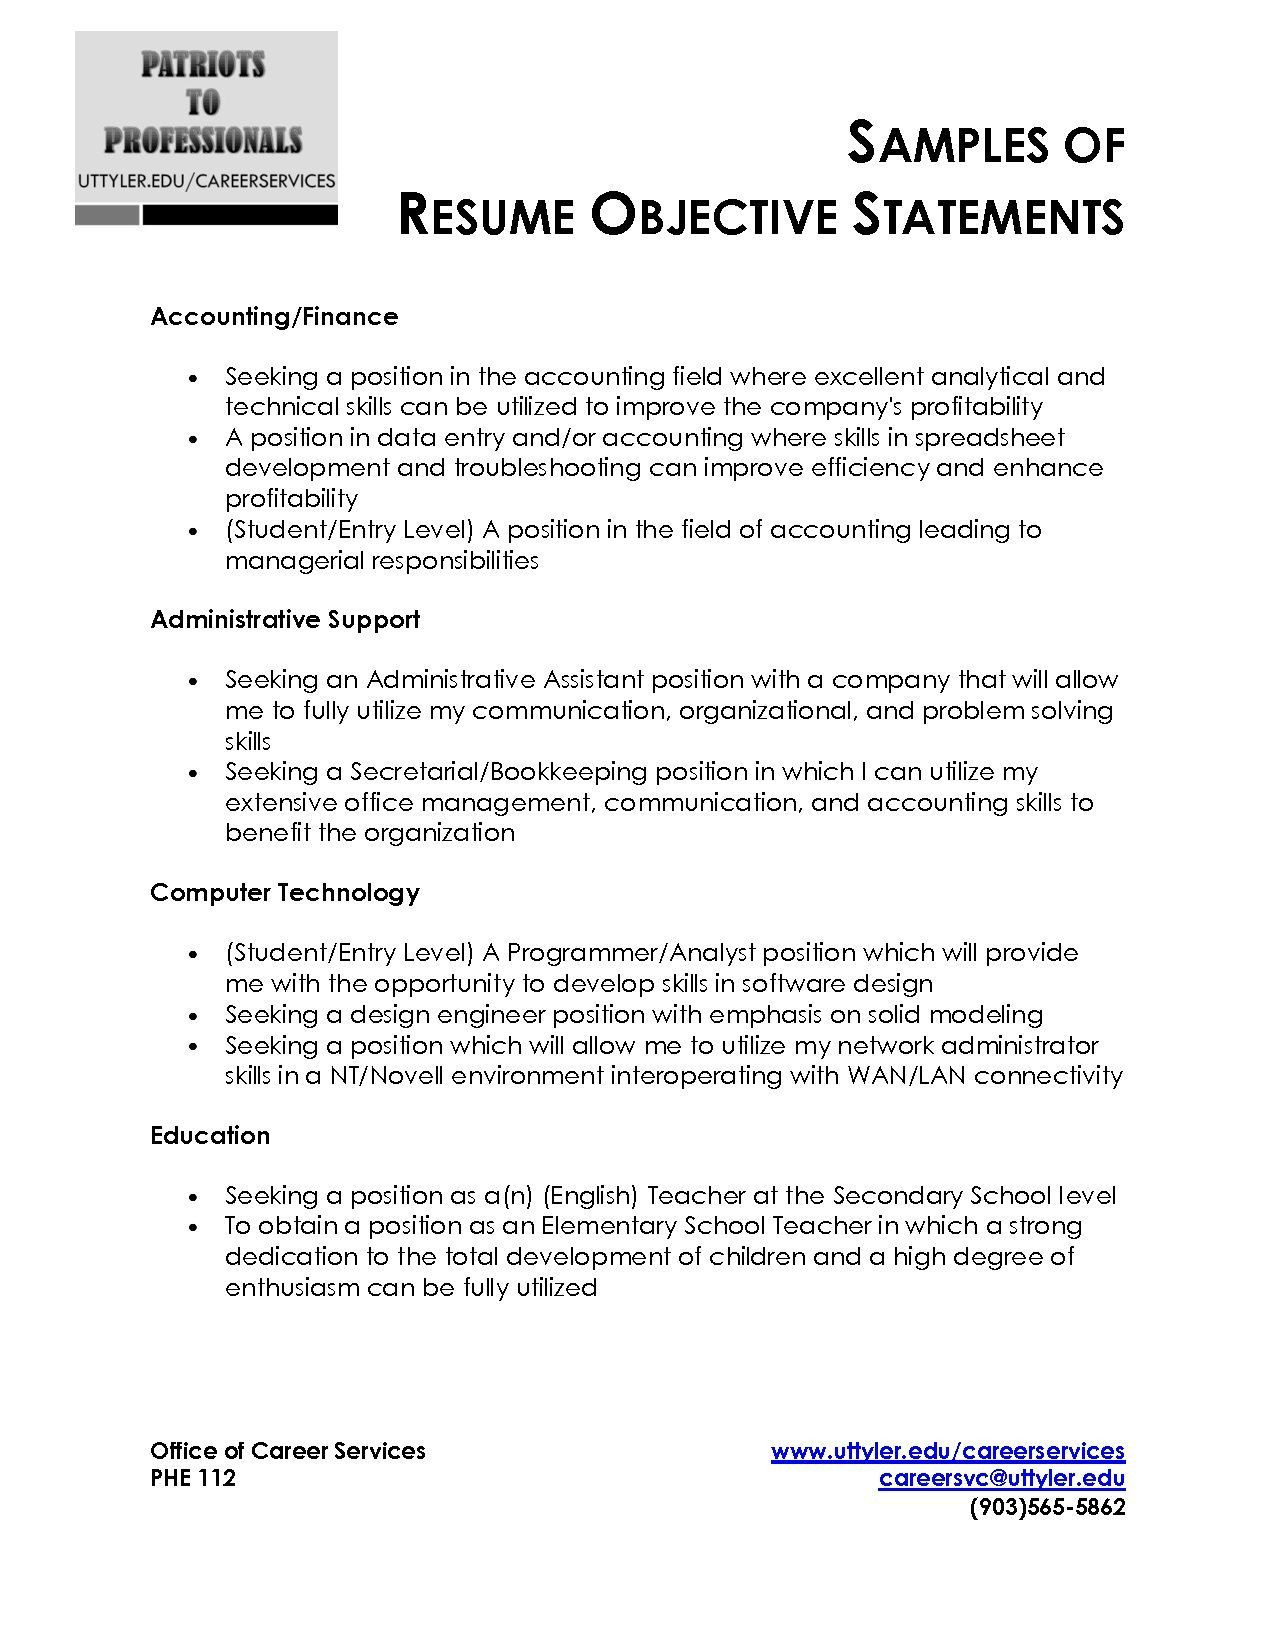 Sample Resume Objective Statements for Customer Service Pin On Random